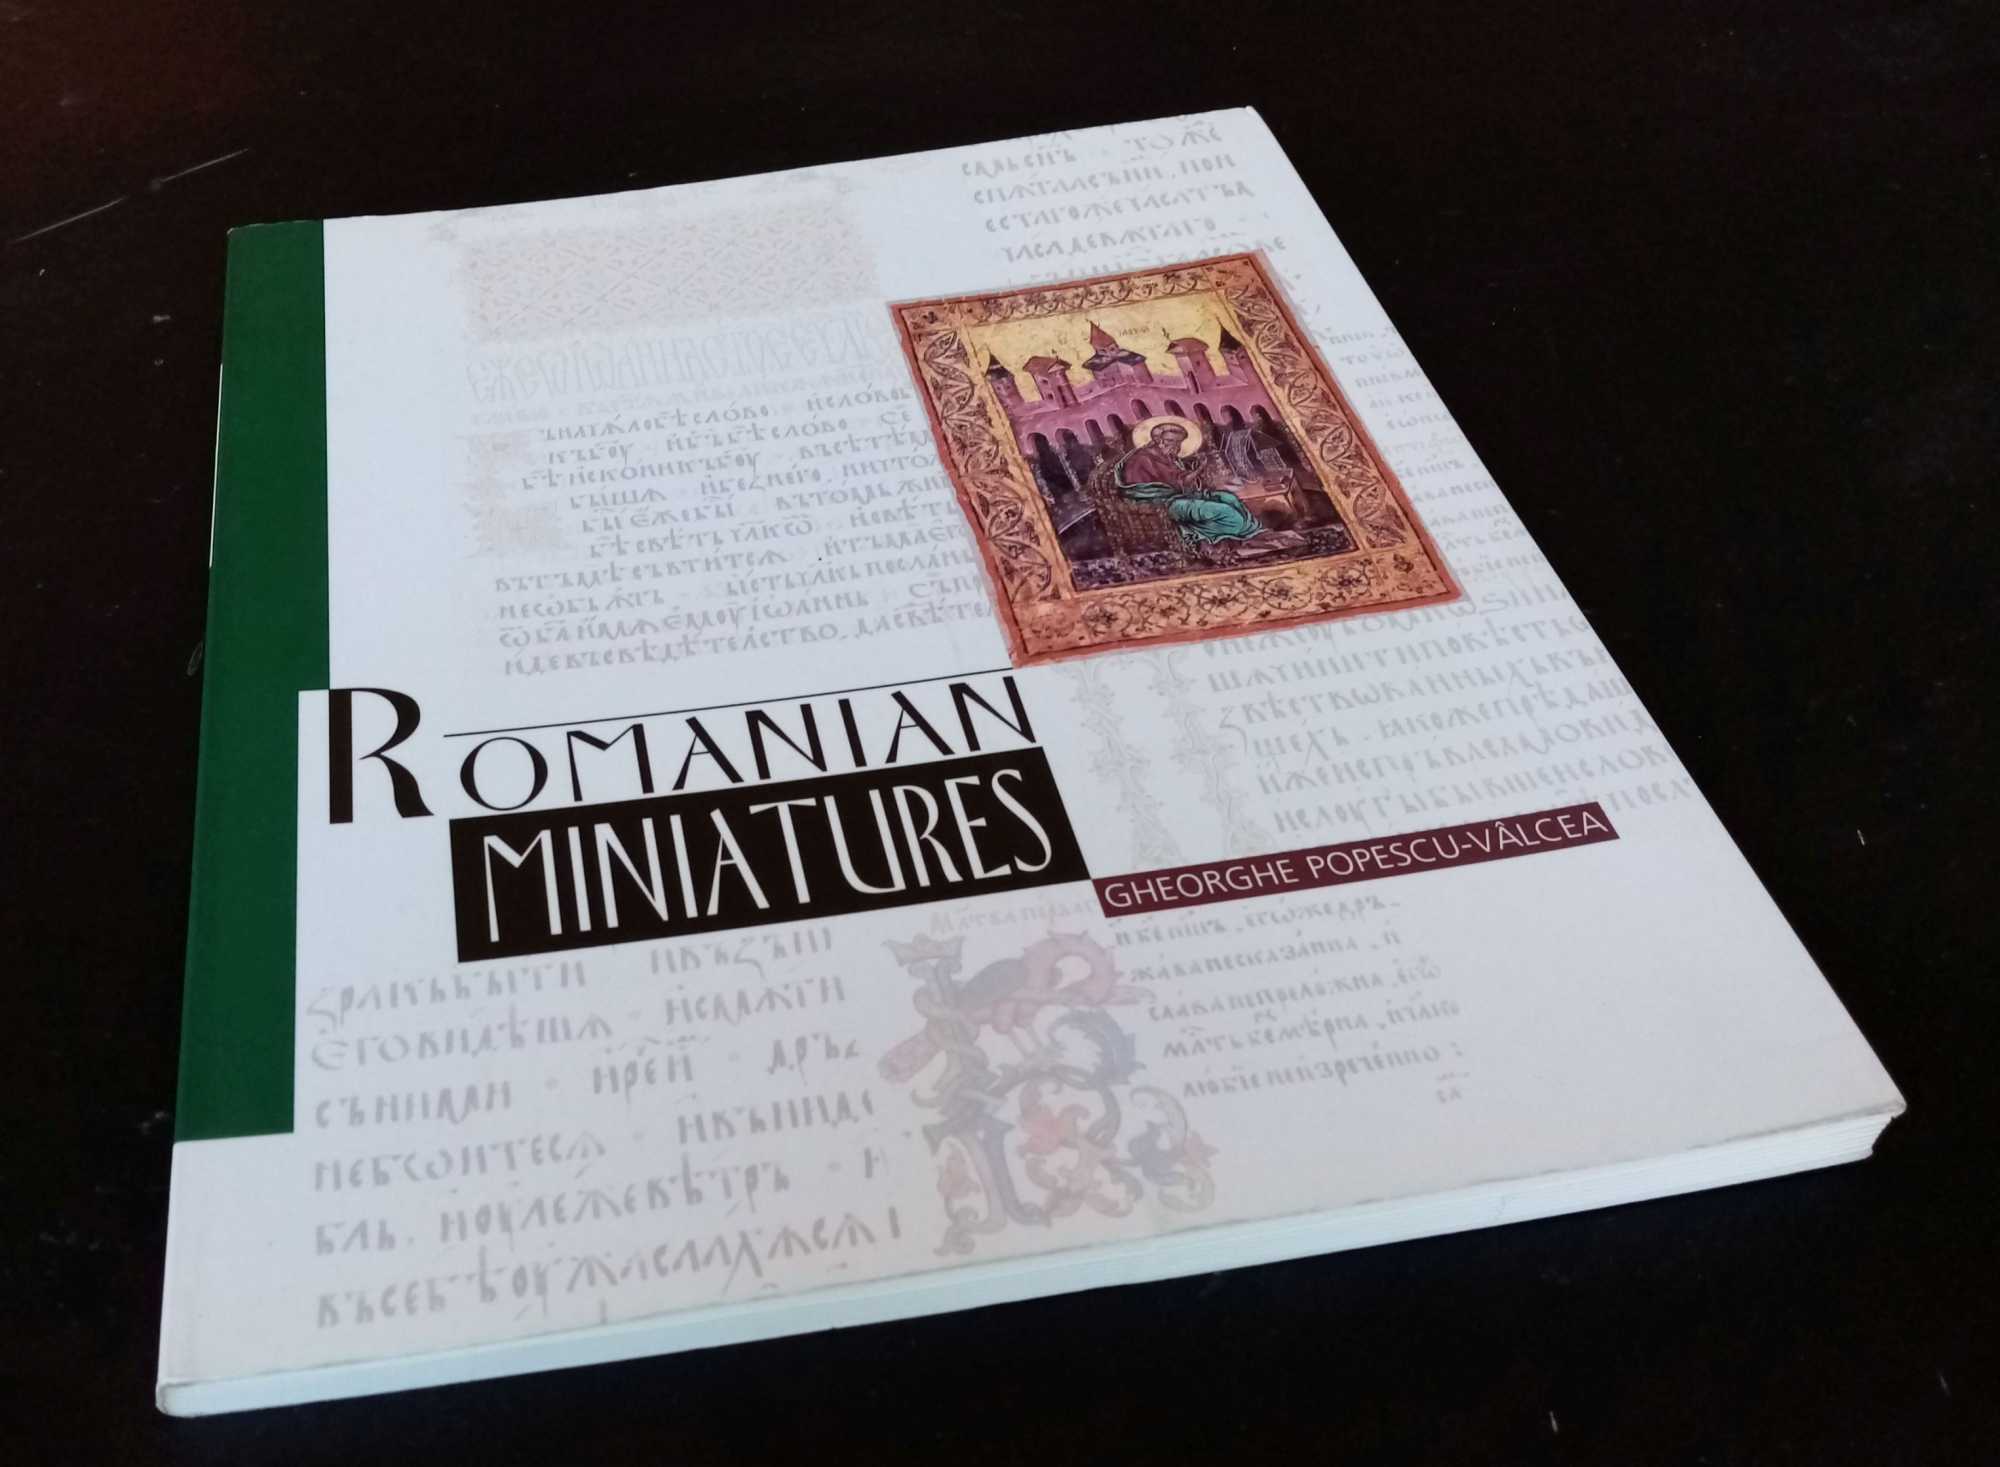 POPESCU-VLCEA, Gheorghe - Romanian Miniatures: Miniatures and Ornaments in Romanian Manuscripts